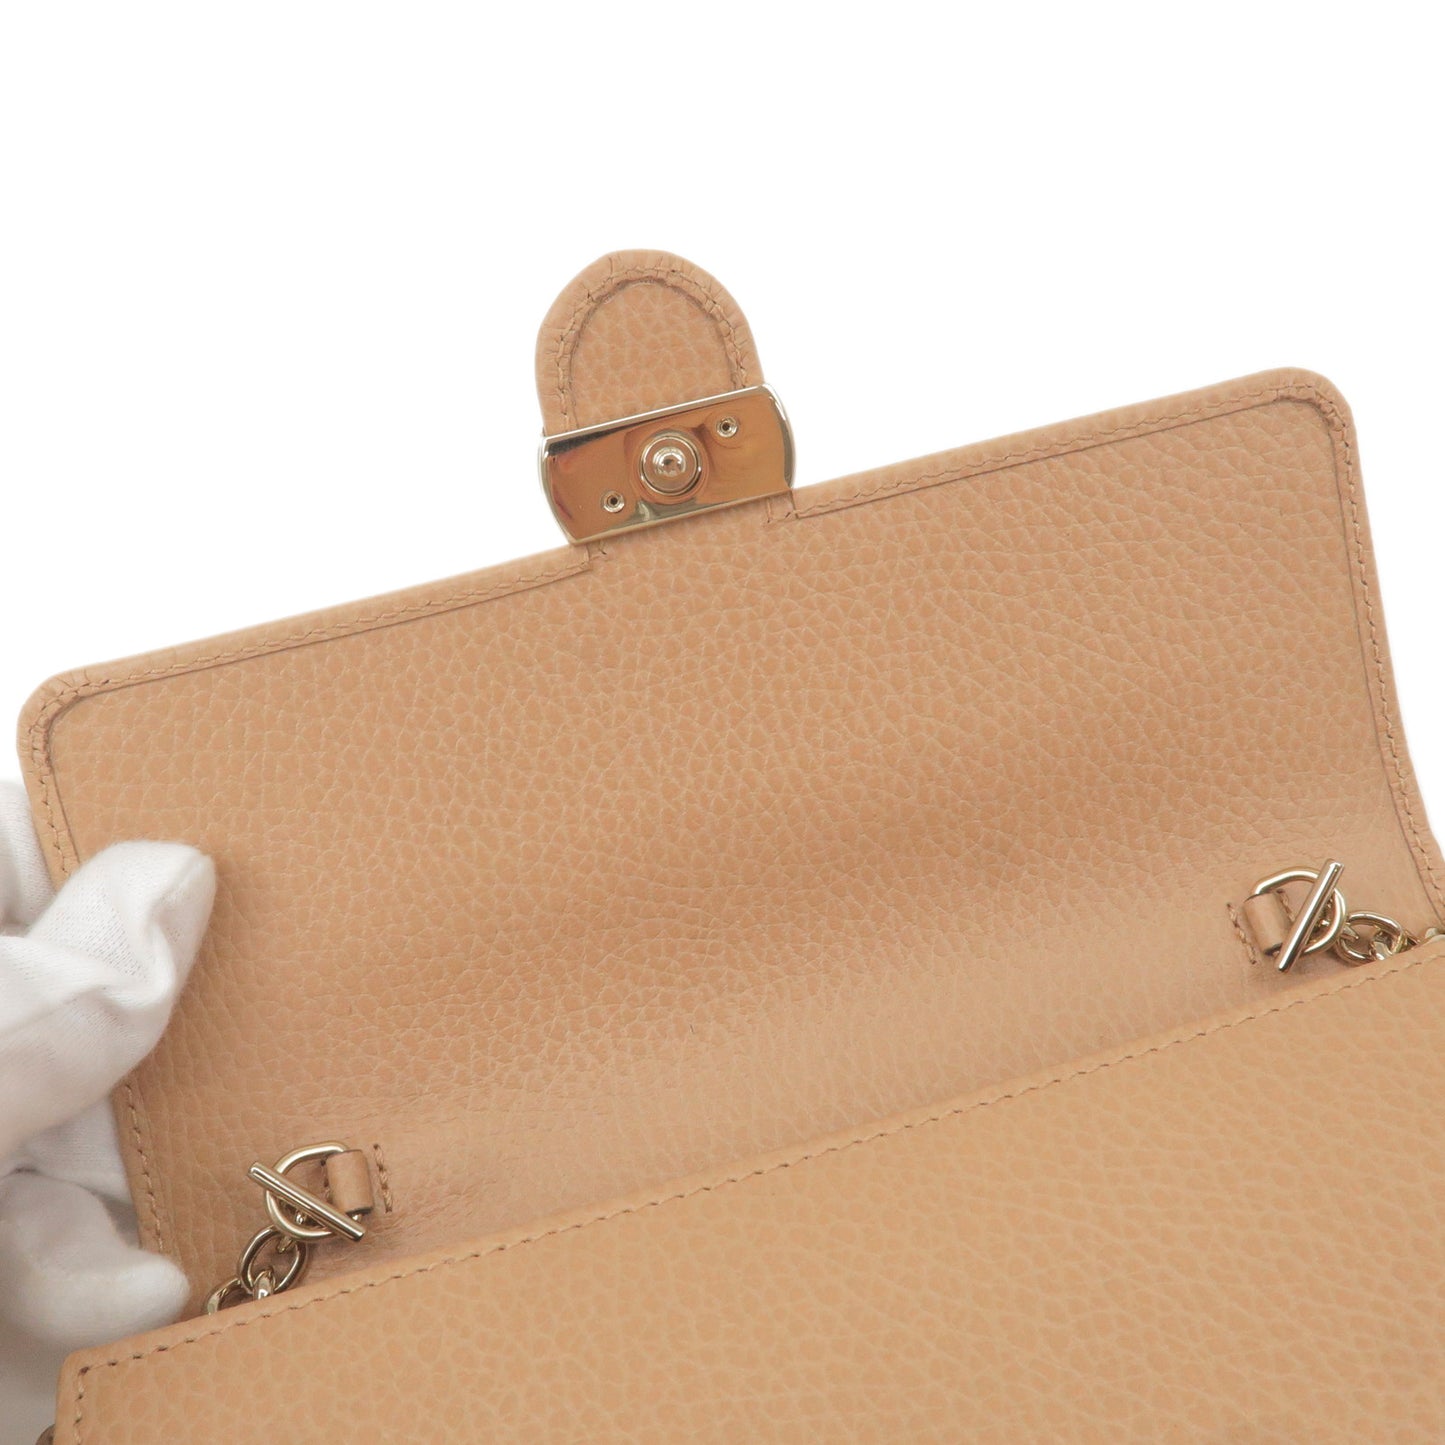 GUCCI Interlocking G Leather Chain Shoulder Bag Wallet 615523